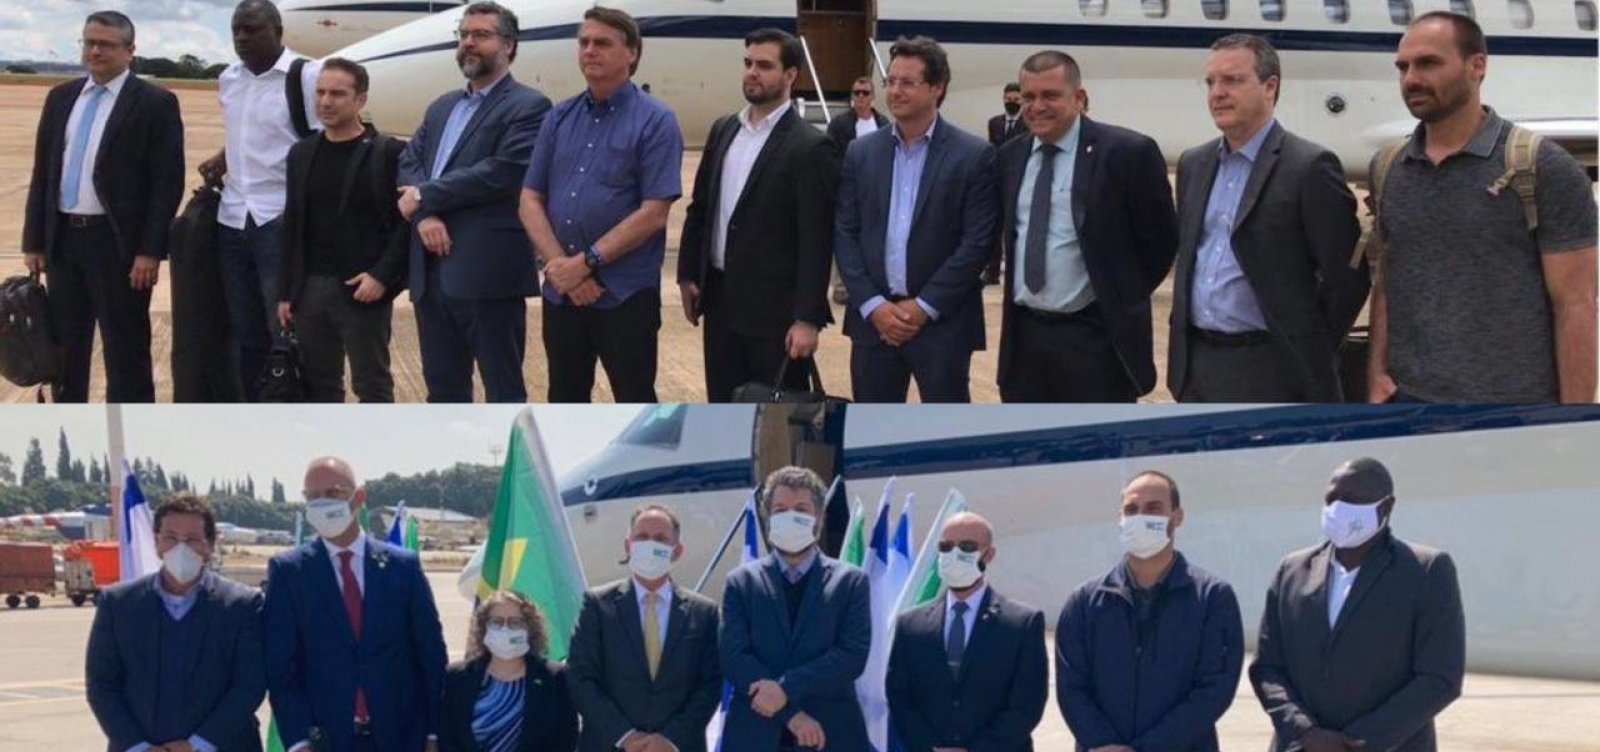 Representantes do governo embarcam a Israel sem máscaras, mas utilizam equipamentos ao chegar ao país